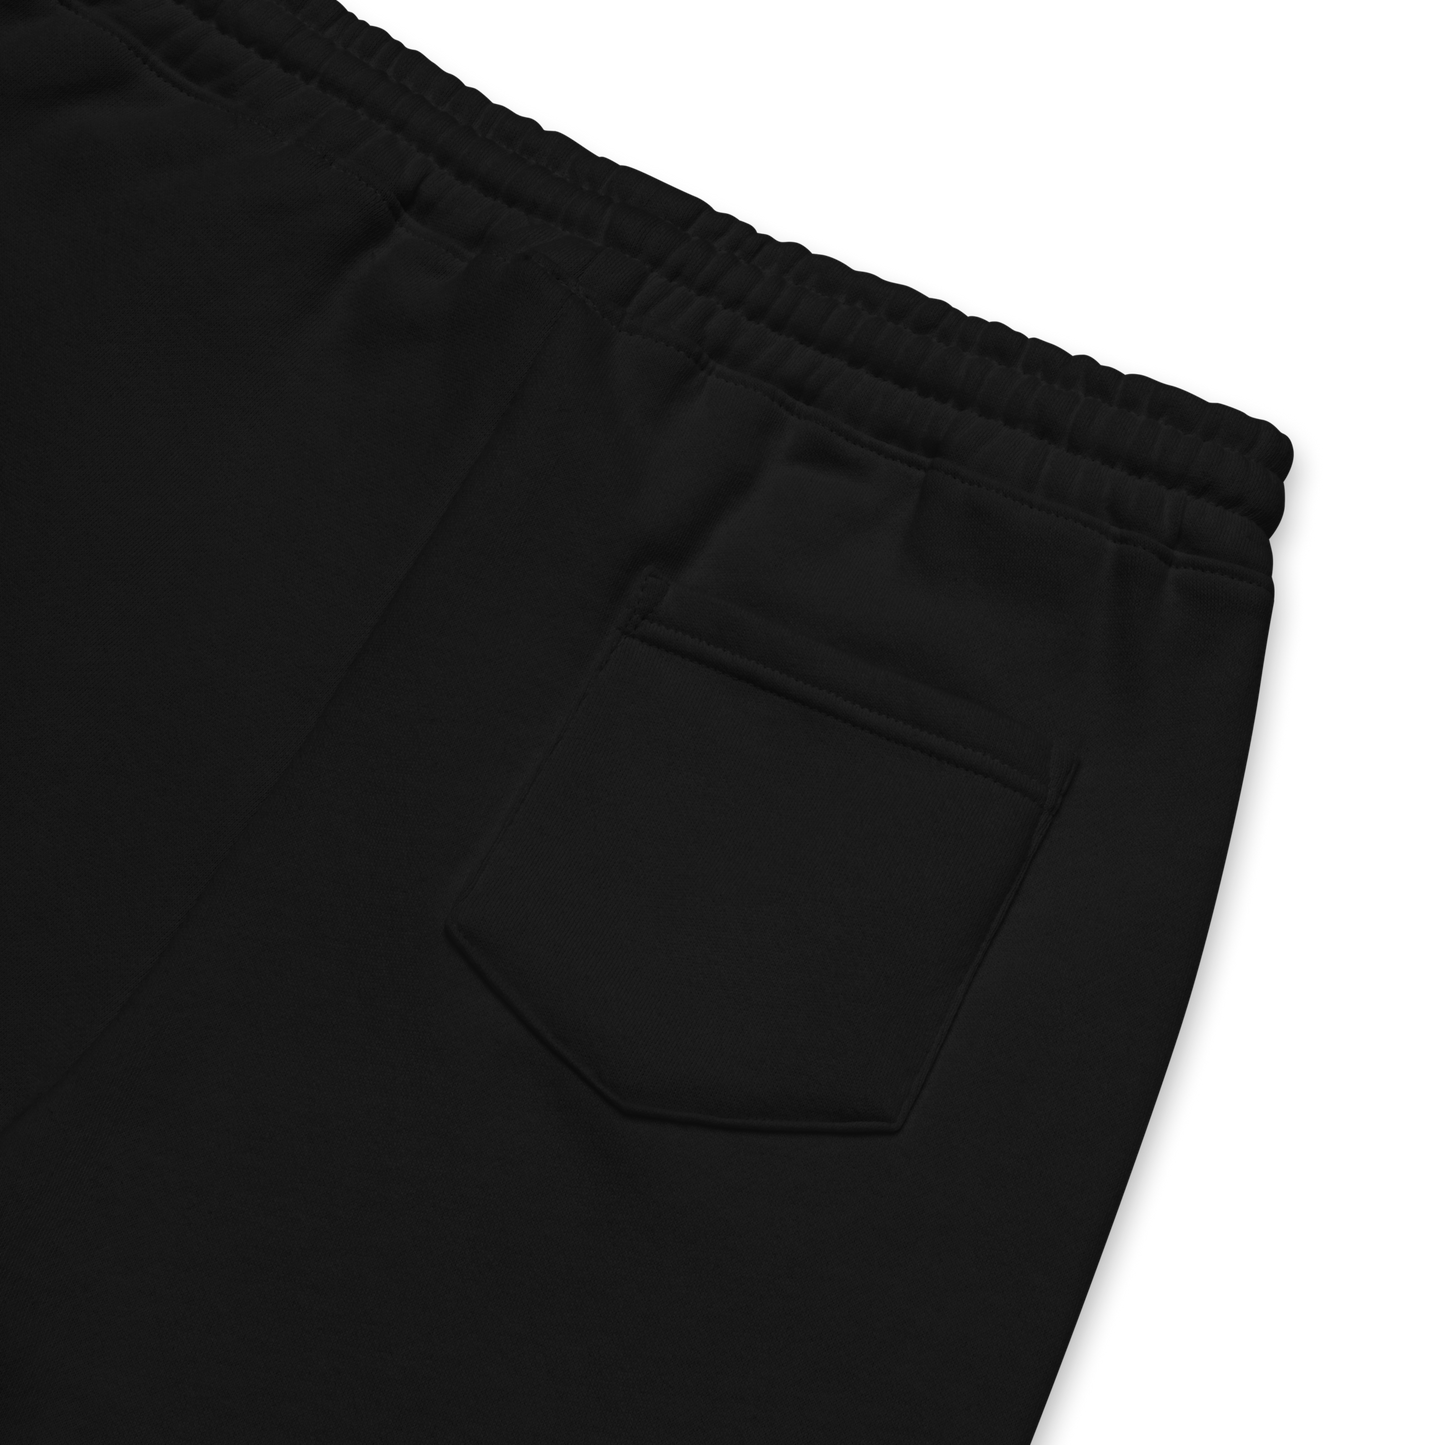 "Barcode" Men's Fleece Shorts